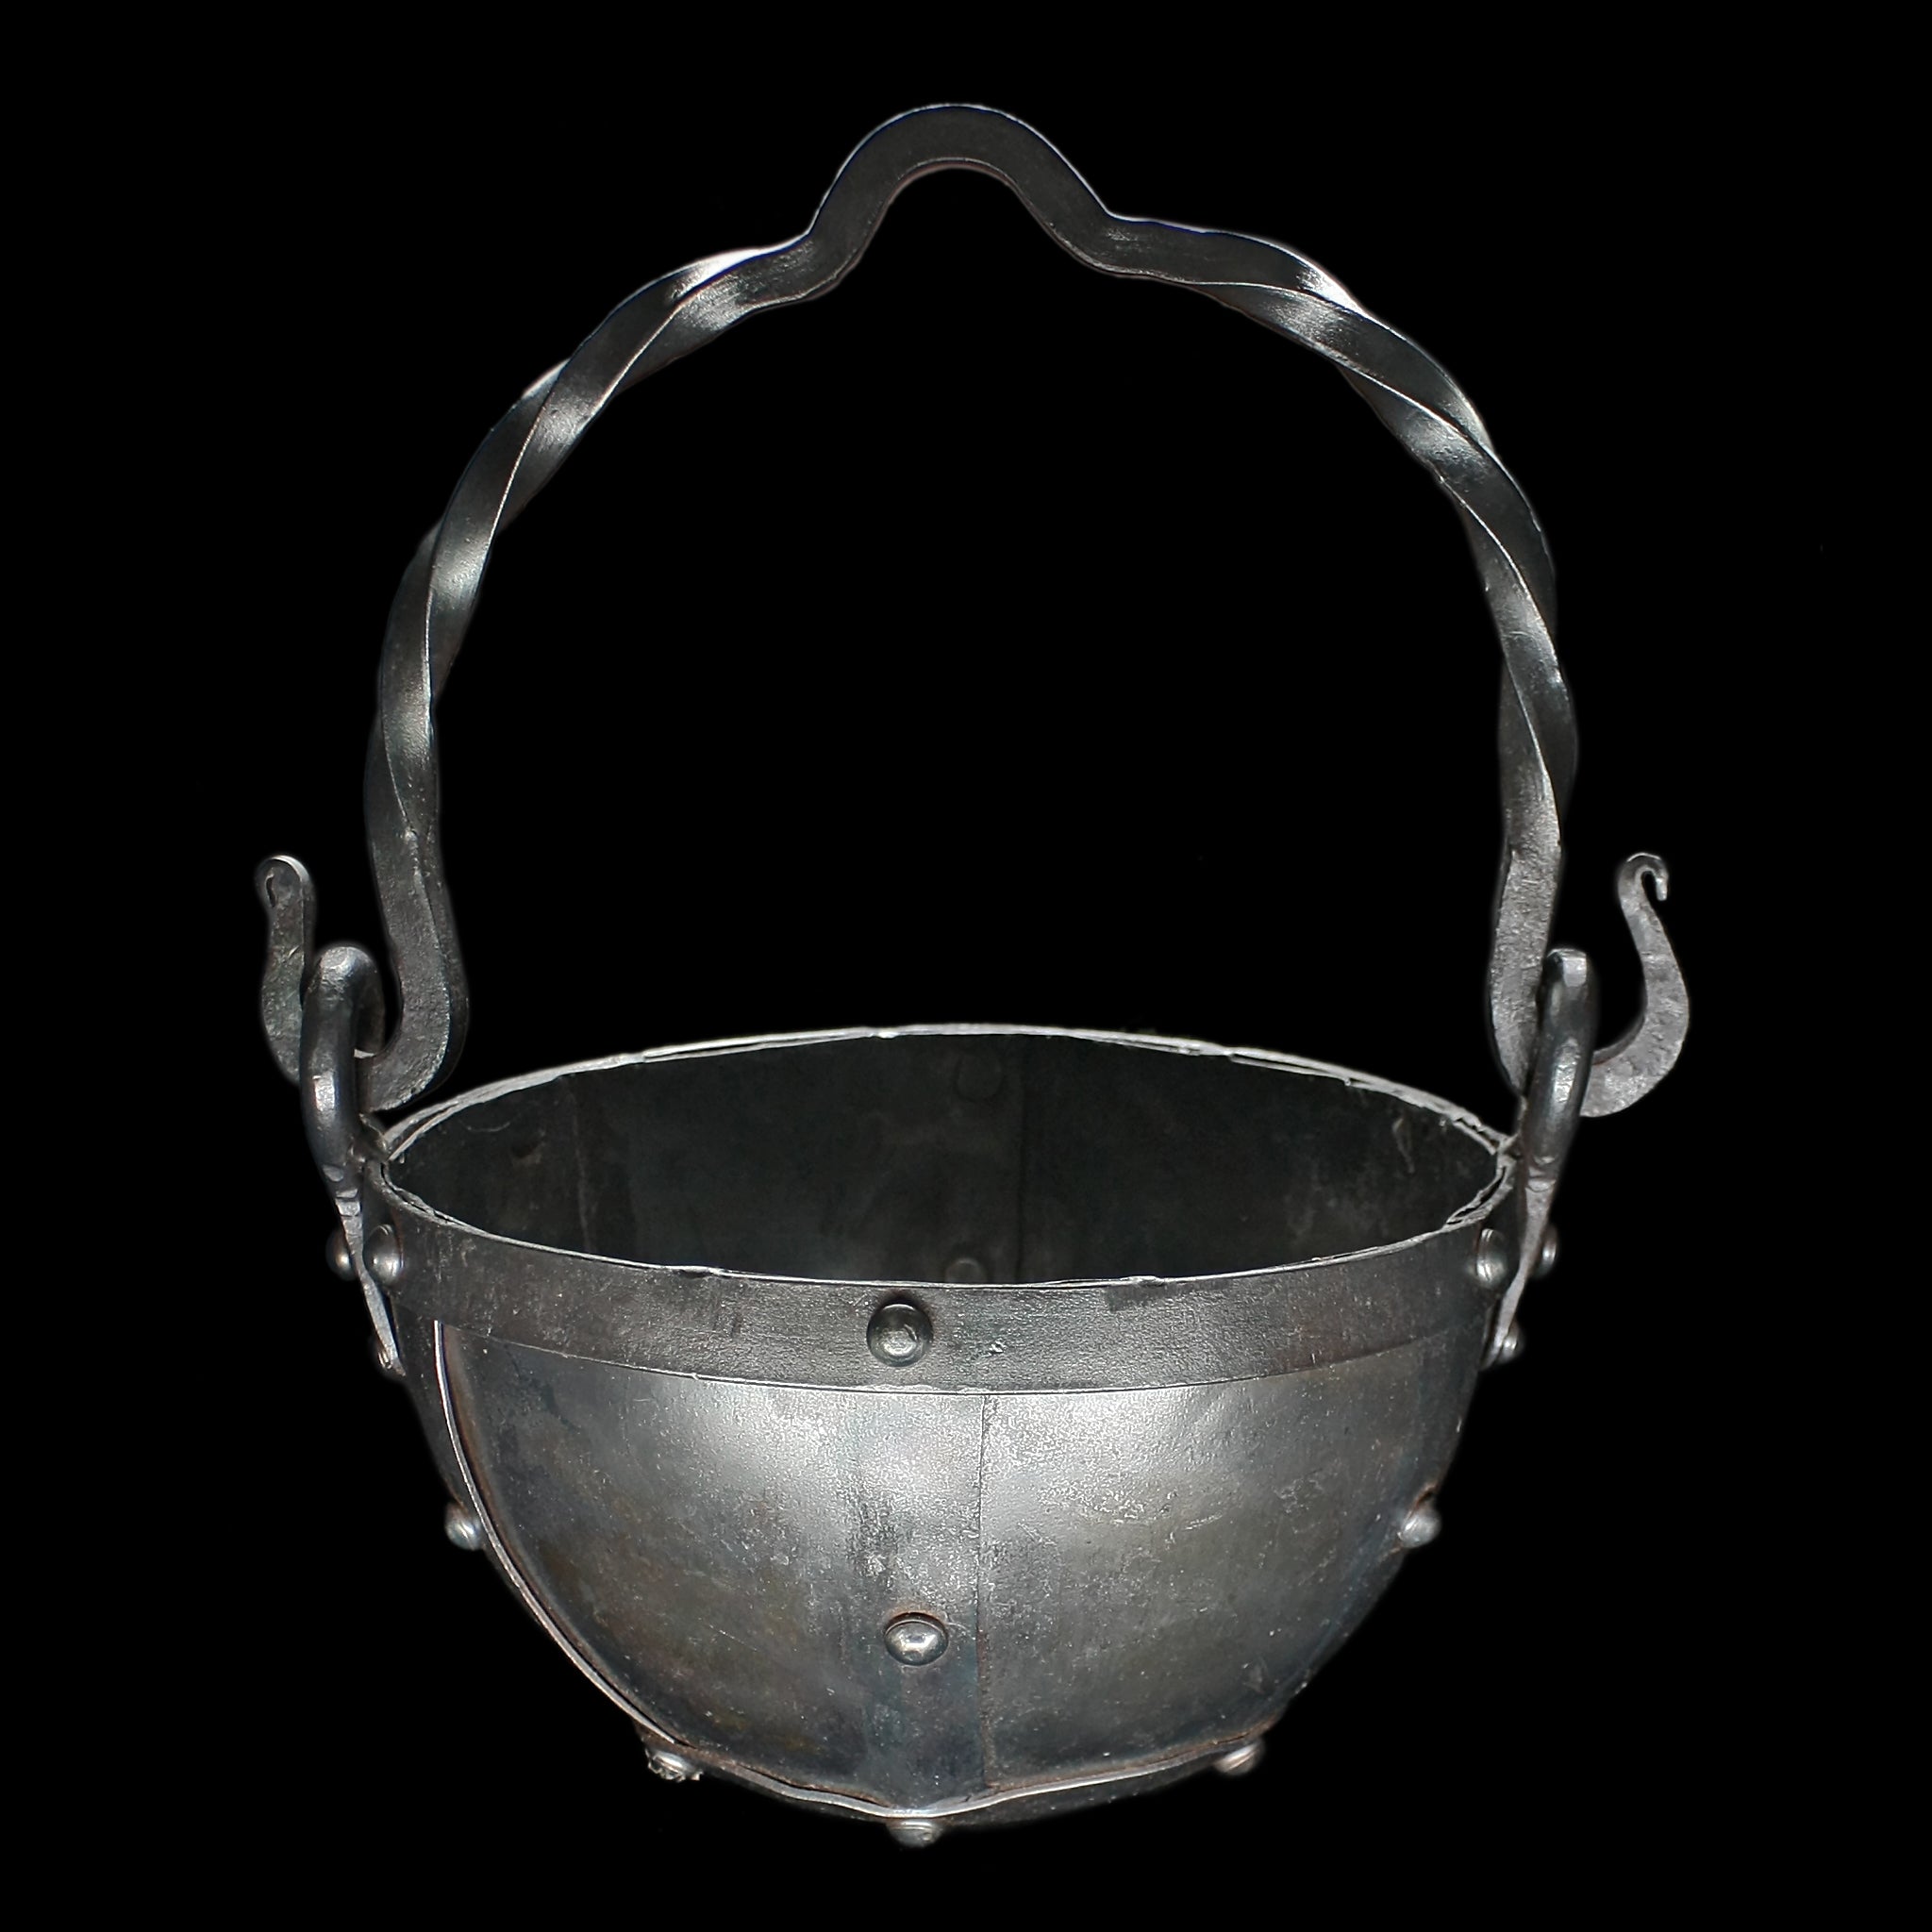 Hand-Forged Riveted Steel Cauldron from Oseberg - Medium